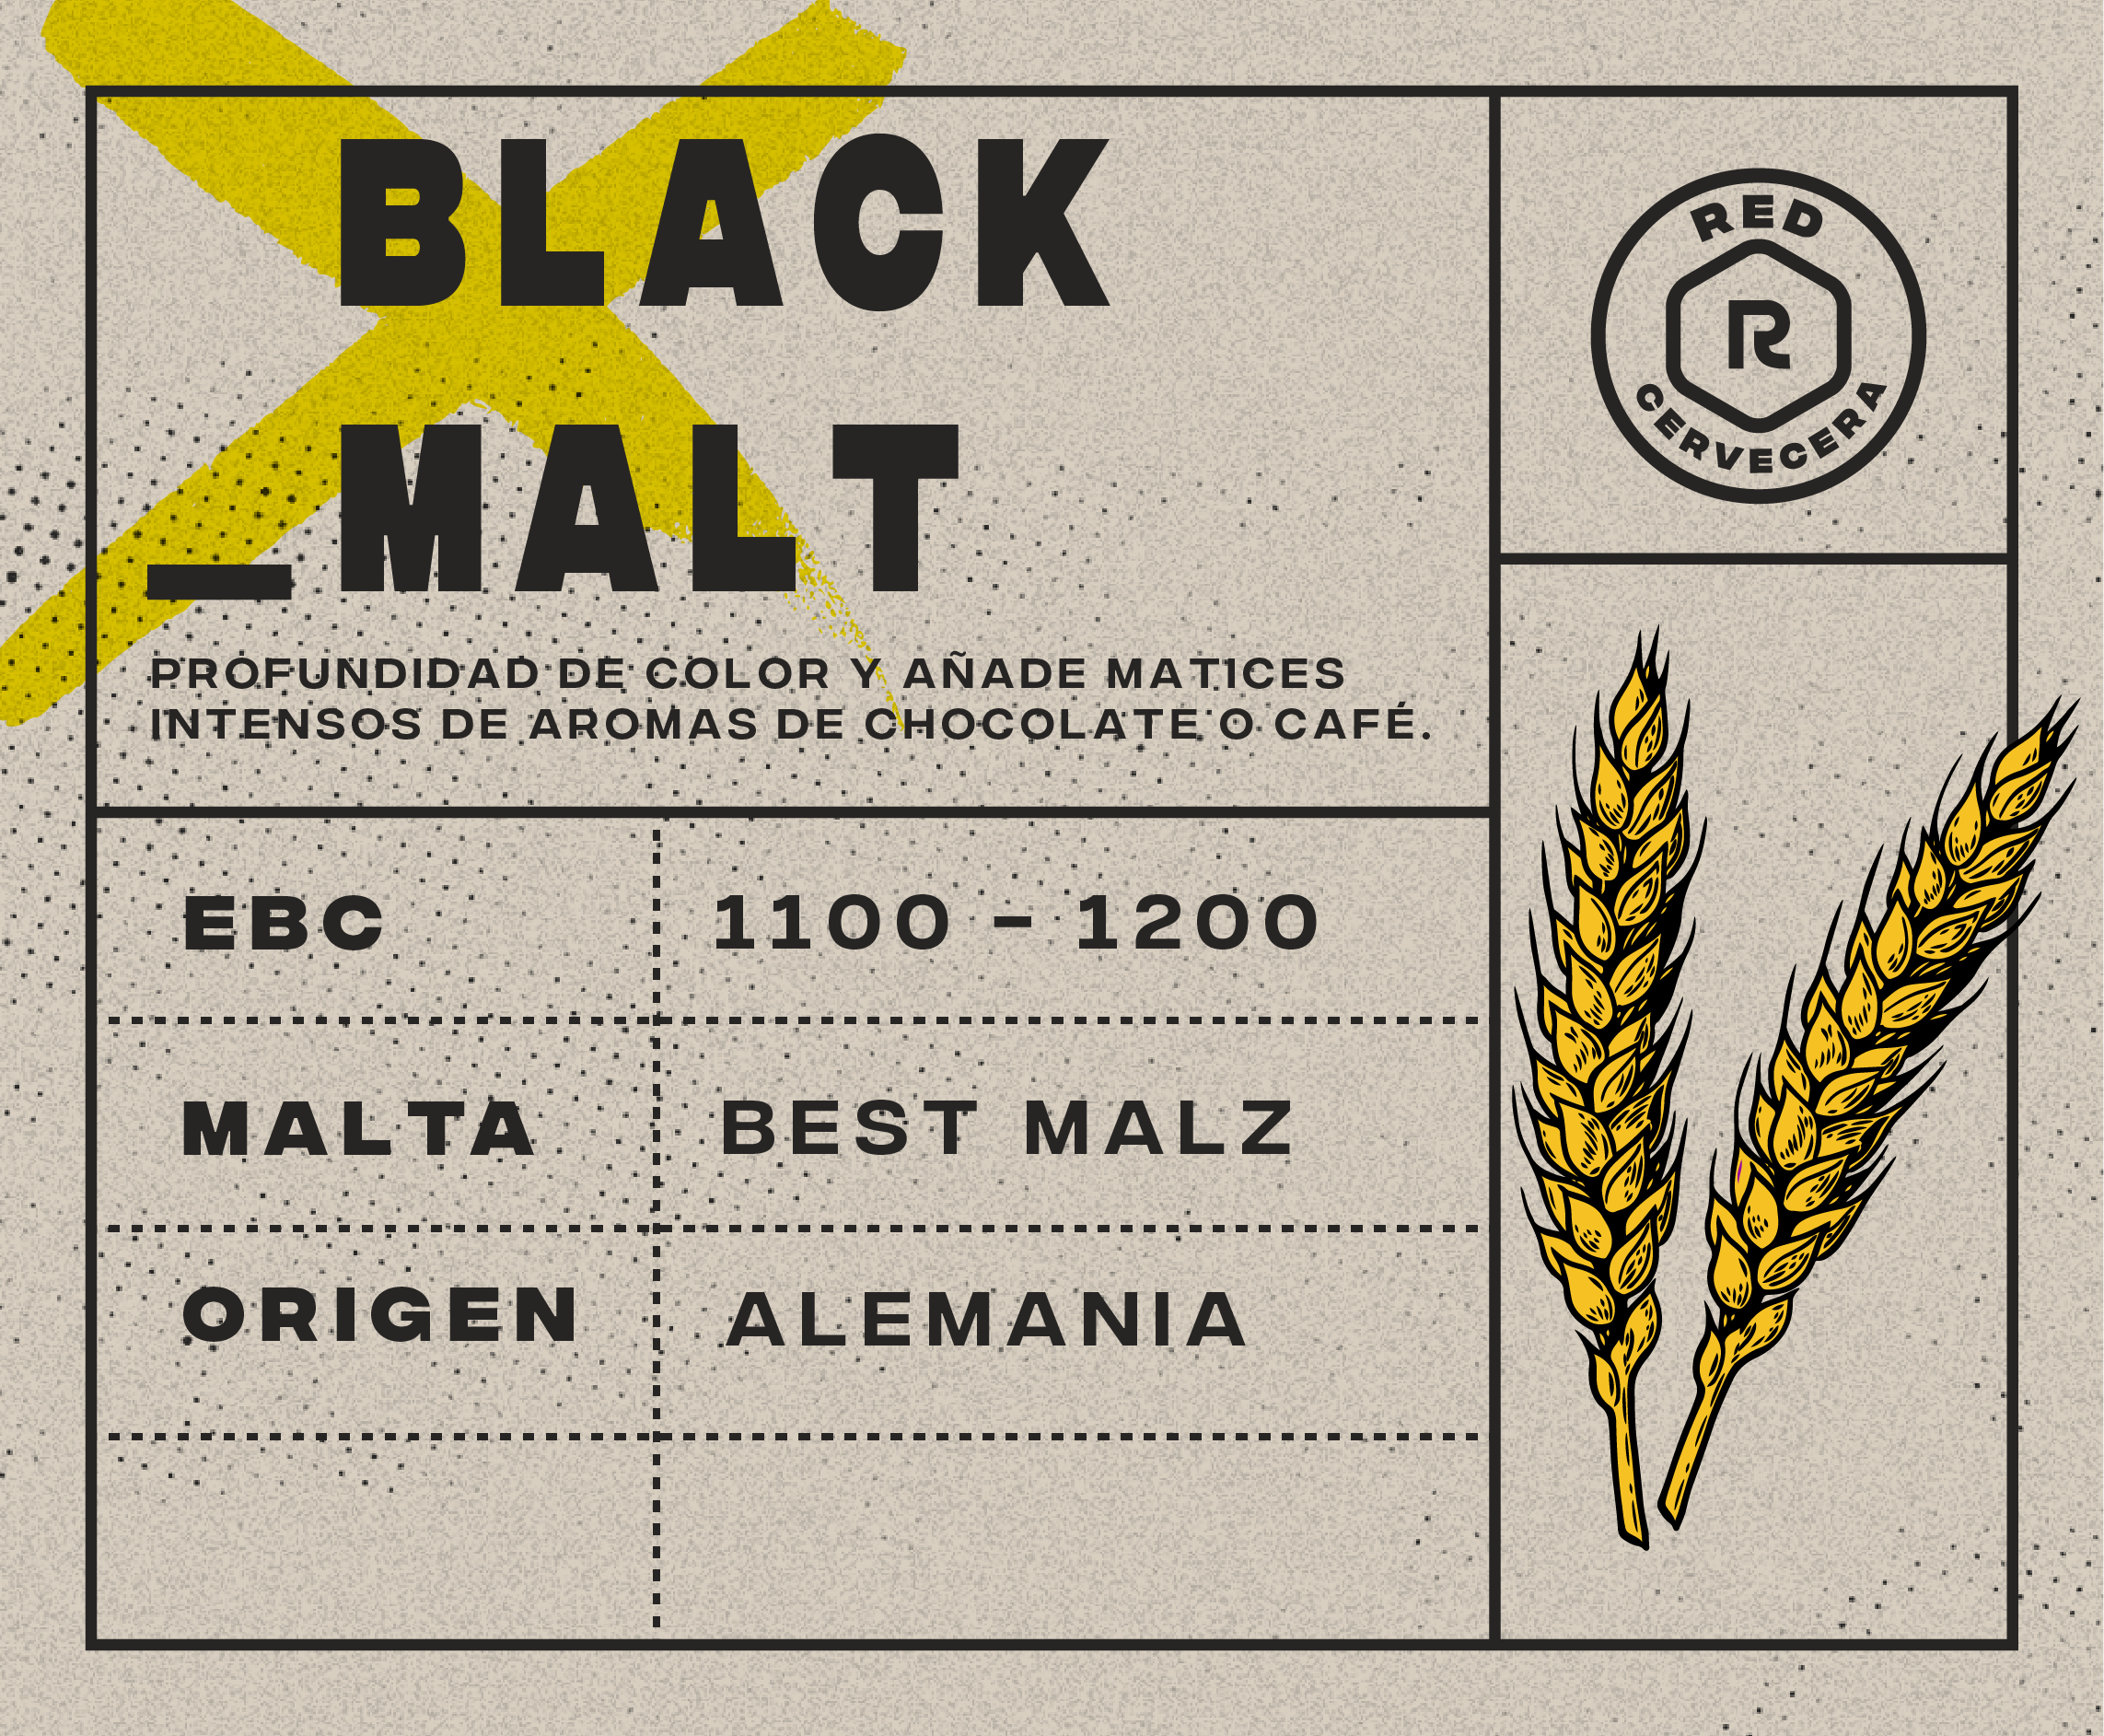 23-Black Malt (EBC 1100-1200) (1 Kg.)